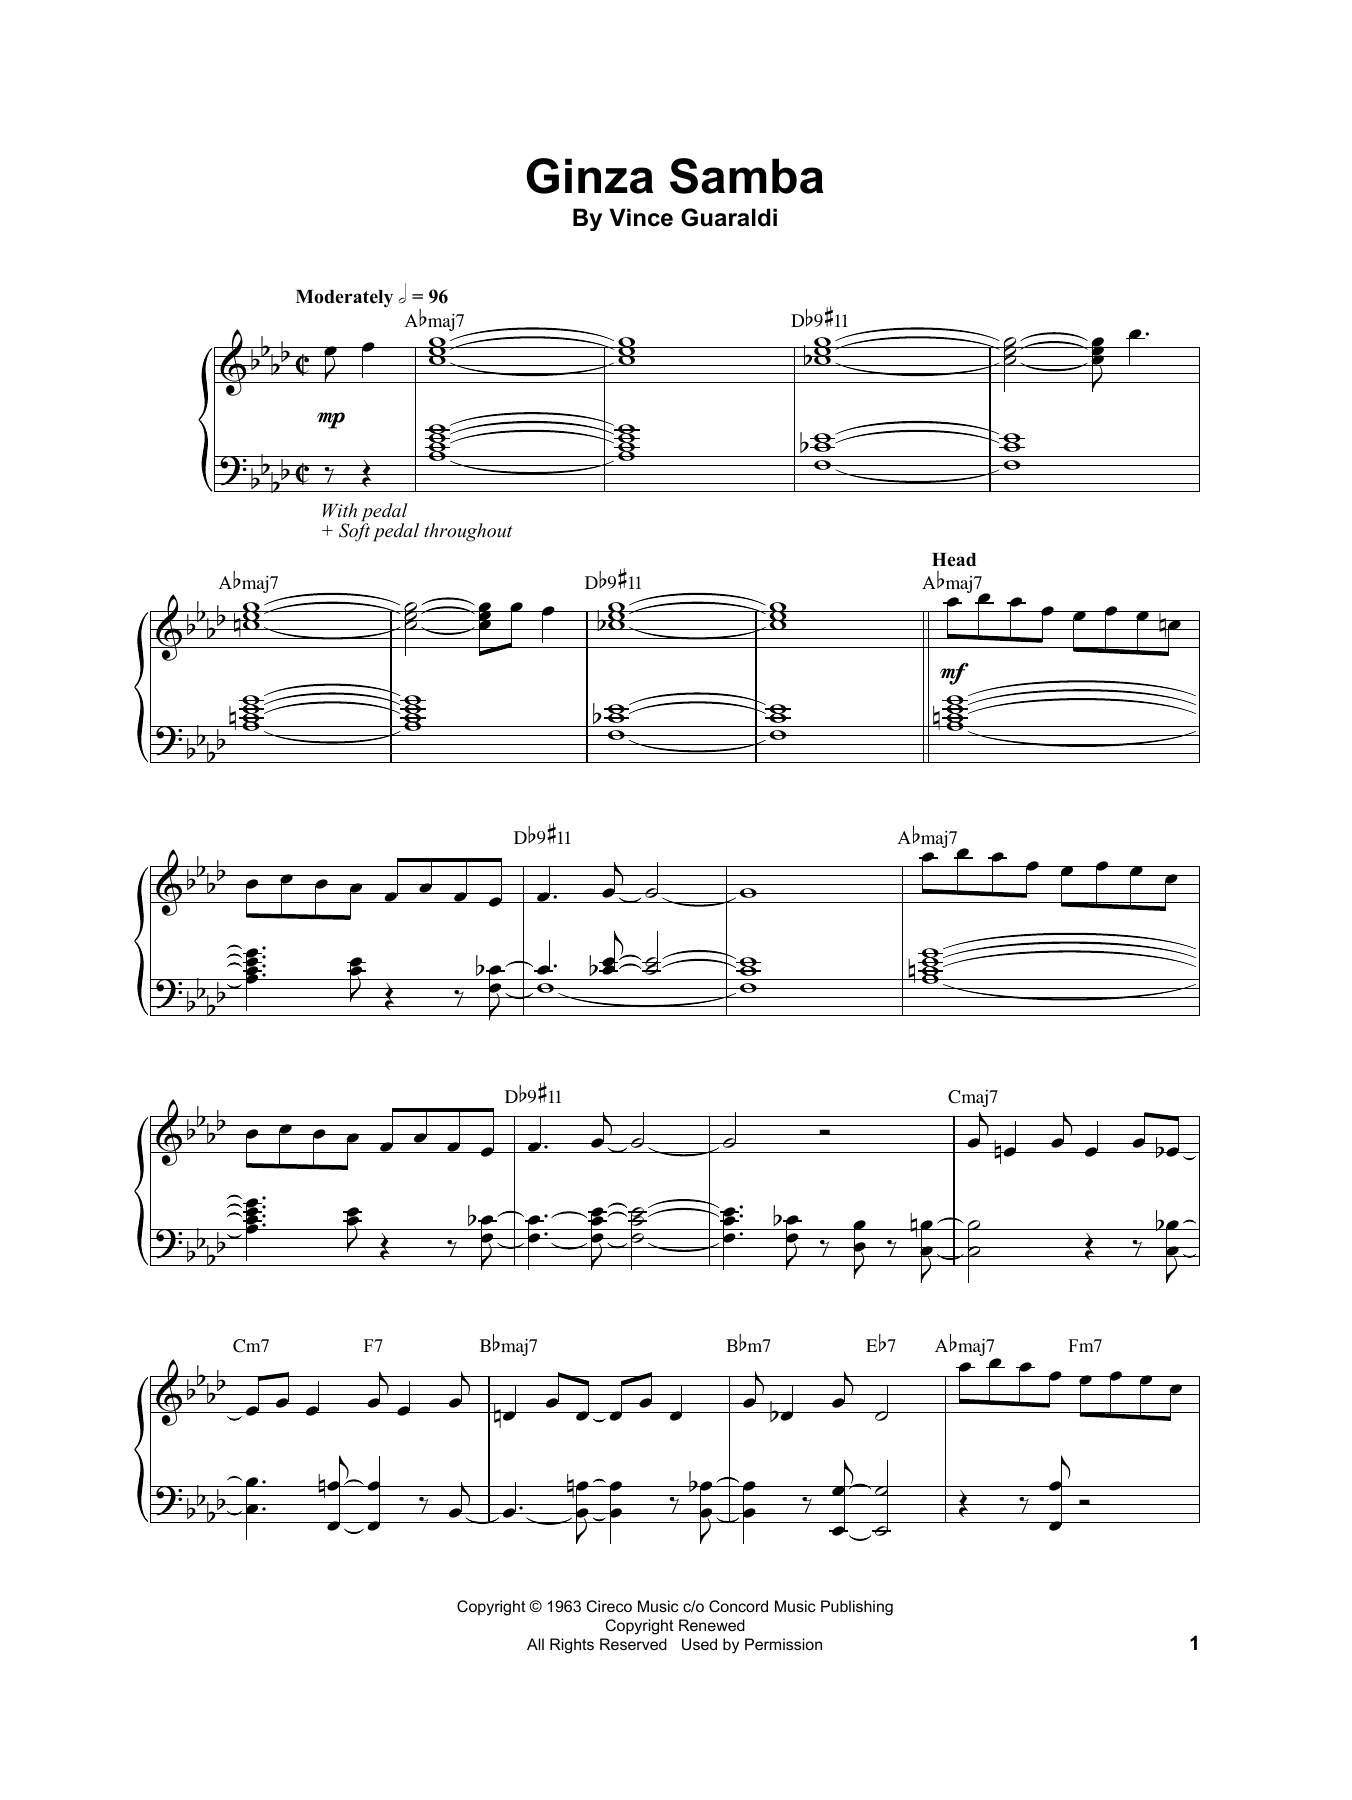 Vince Guaraldi Ginza Samba Sheet Music Notes & Chords for Piano Transcription - Download or Print PDF